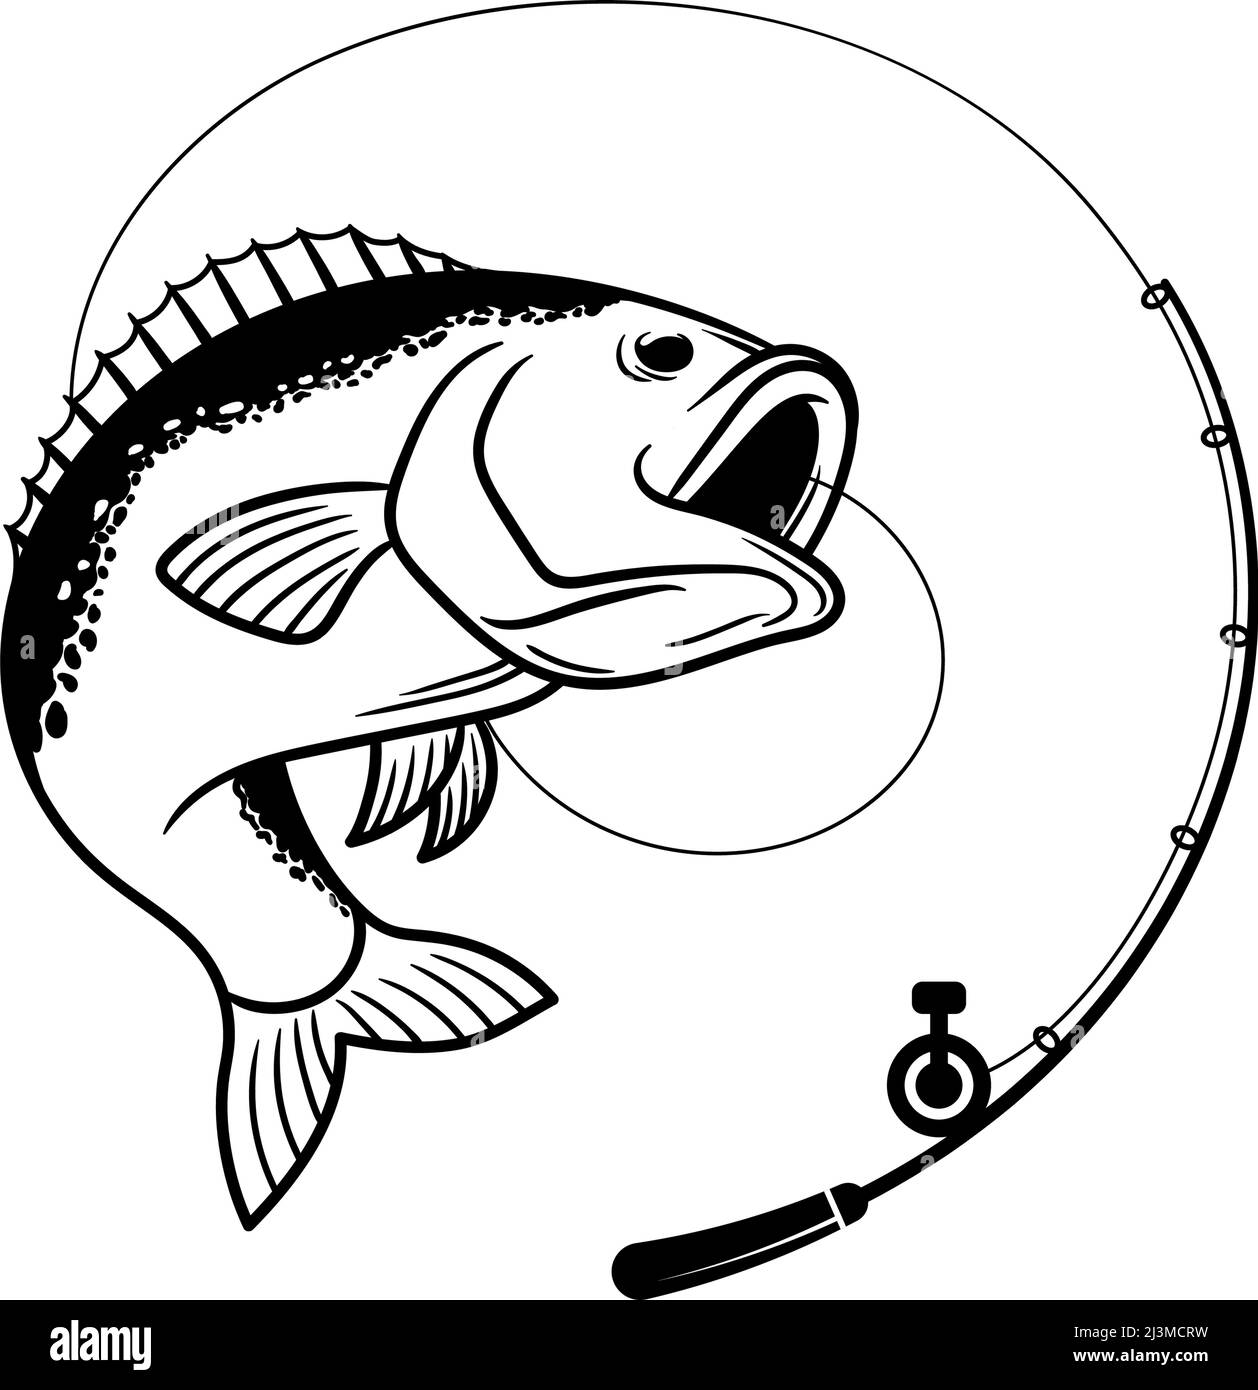 https://c8.alamy.com/comp/2J3MCRW/bass-fishing-line-art-illustration-icon-design-template-vector-2J3MCRW.jpg